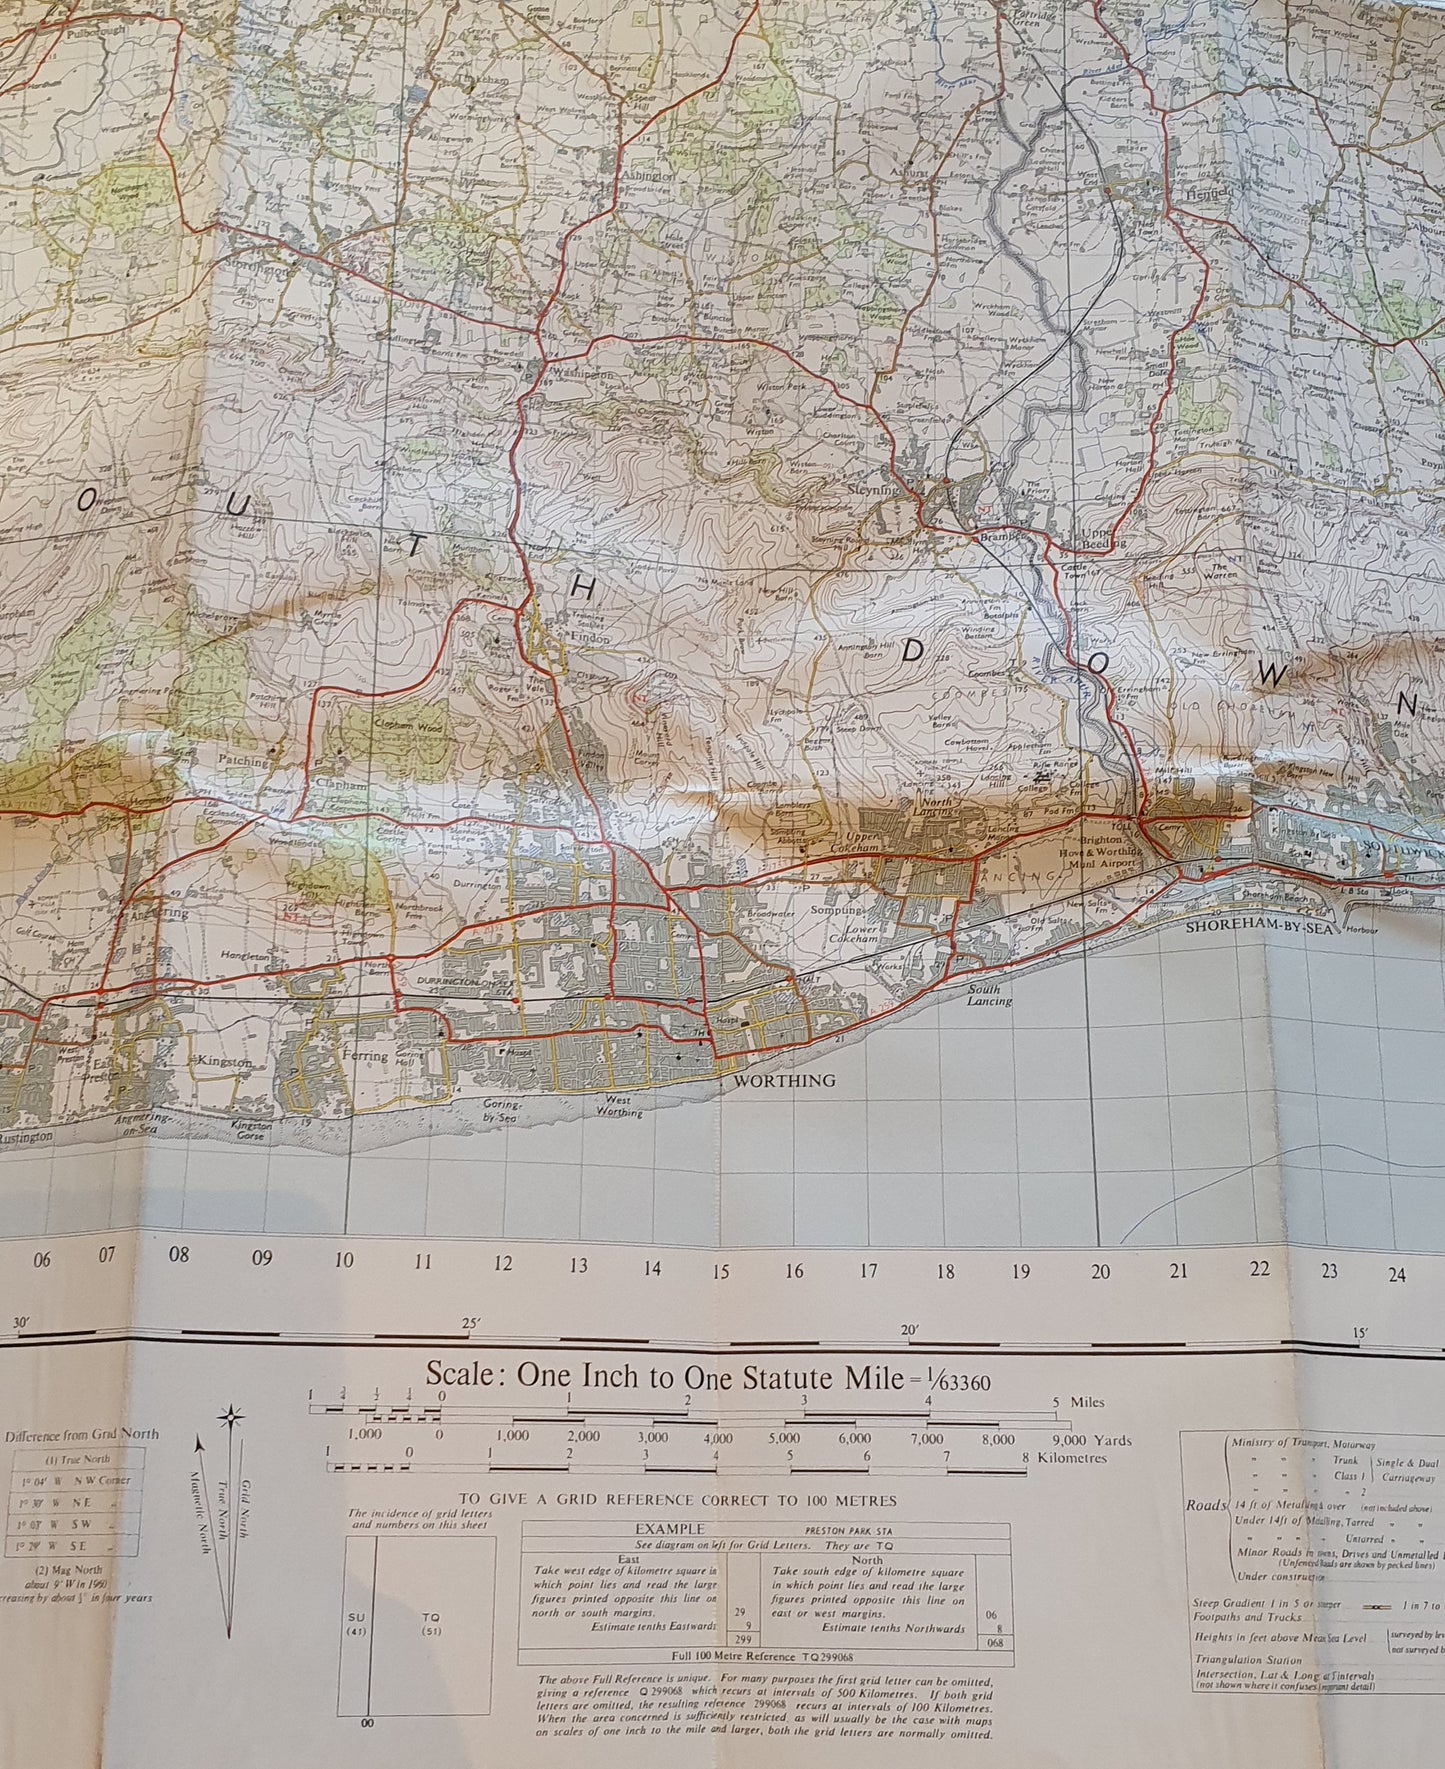 Ordnance Survey One-Inch Map of Great Britain - Brighton & Worthing (Sheet 182)